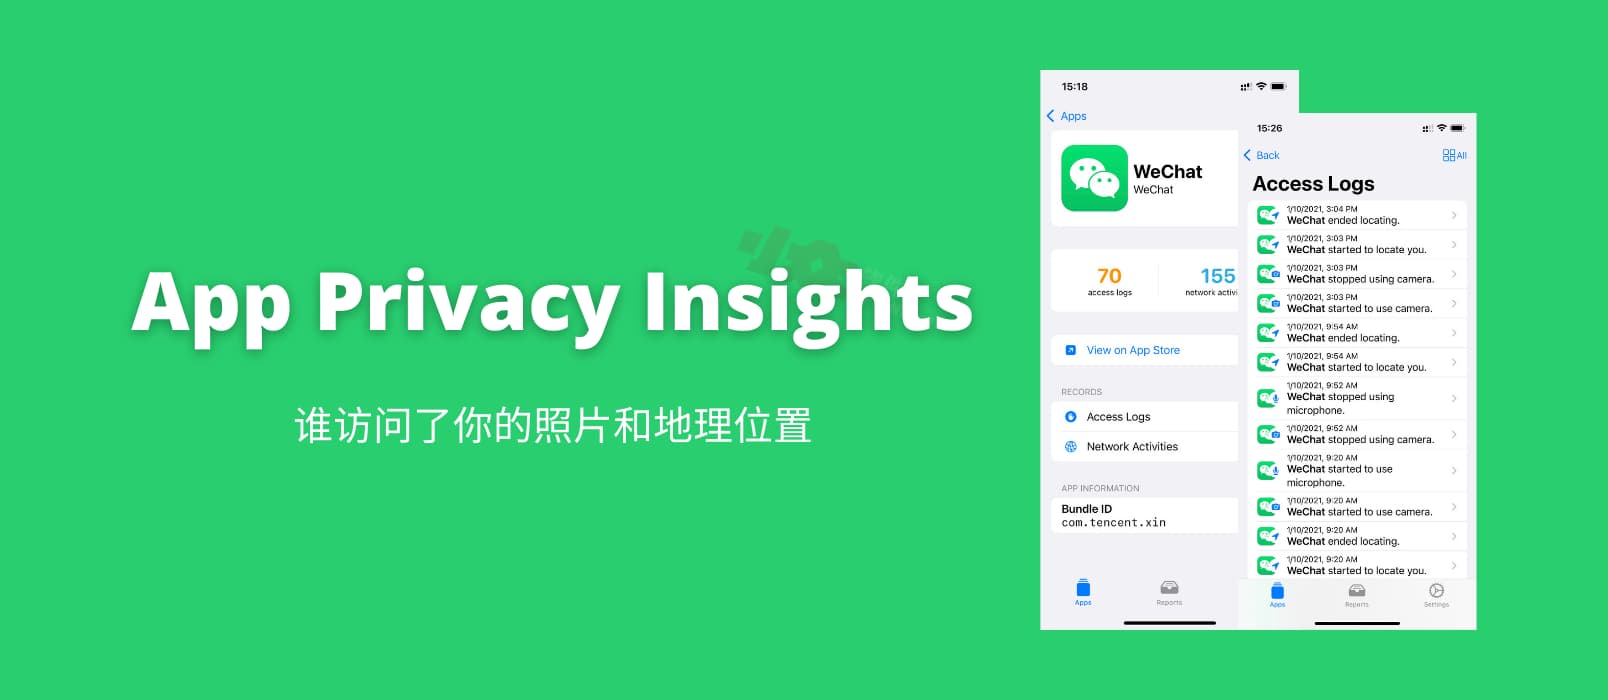 App Privacy Insights - 谁访问了你的照片和地理位置，7 天内[iOS] 1